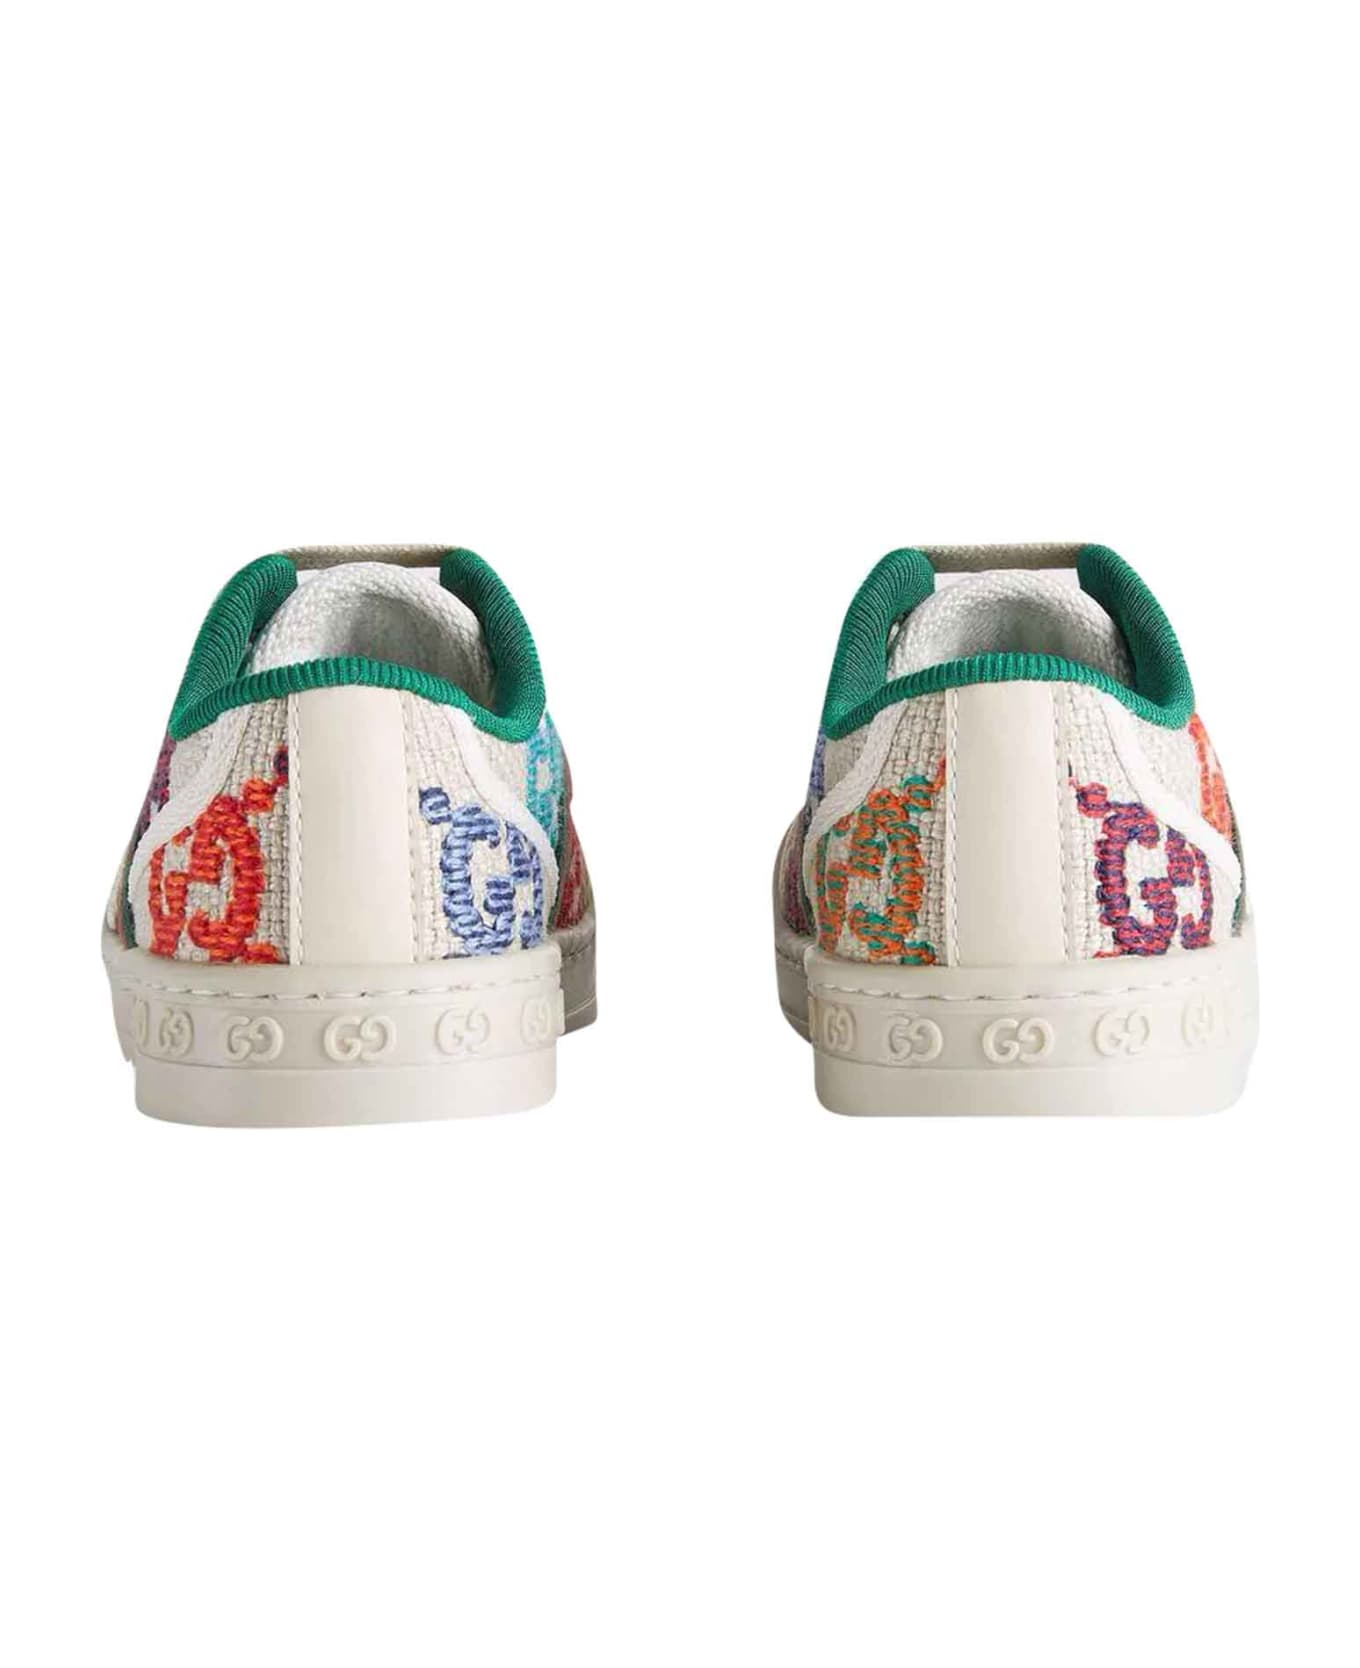 Gucci Multicolor Sneakers Unisex - Multicolor